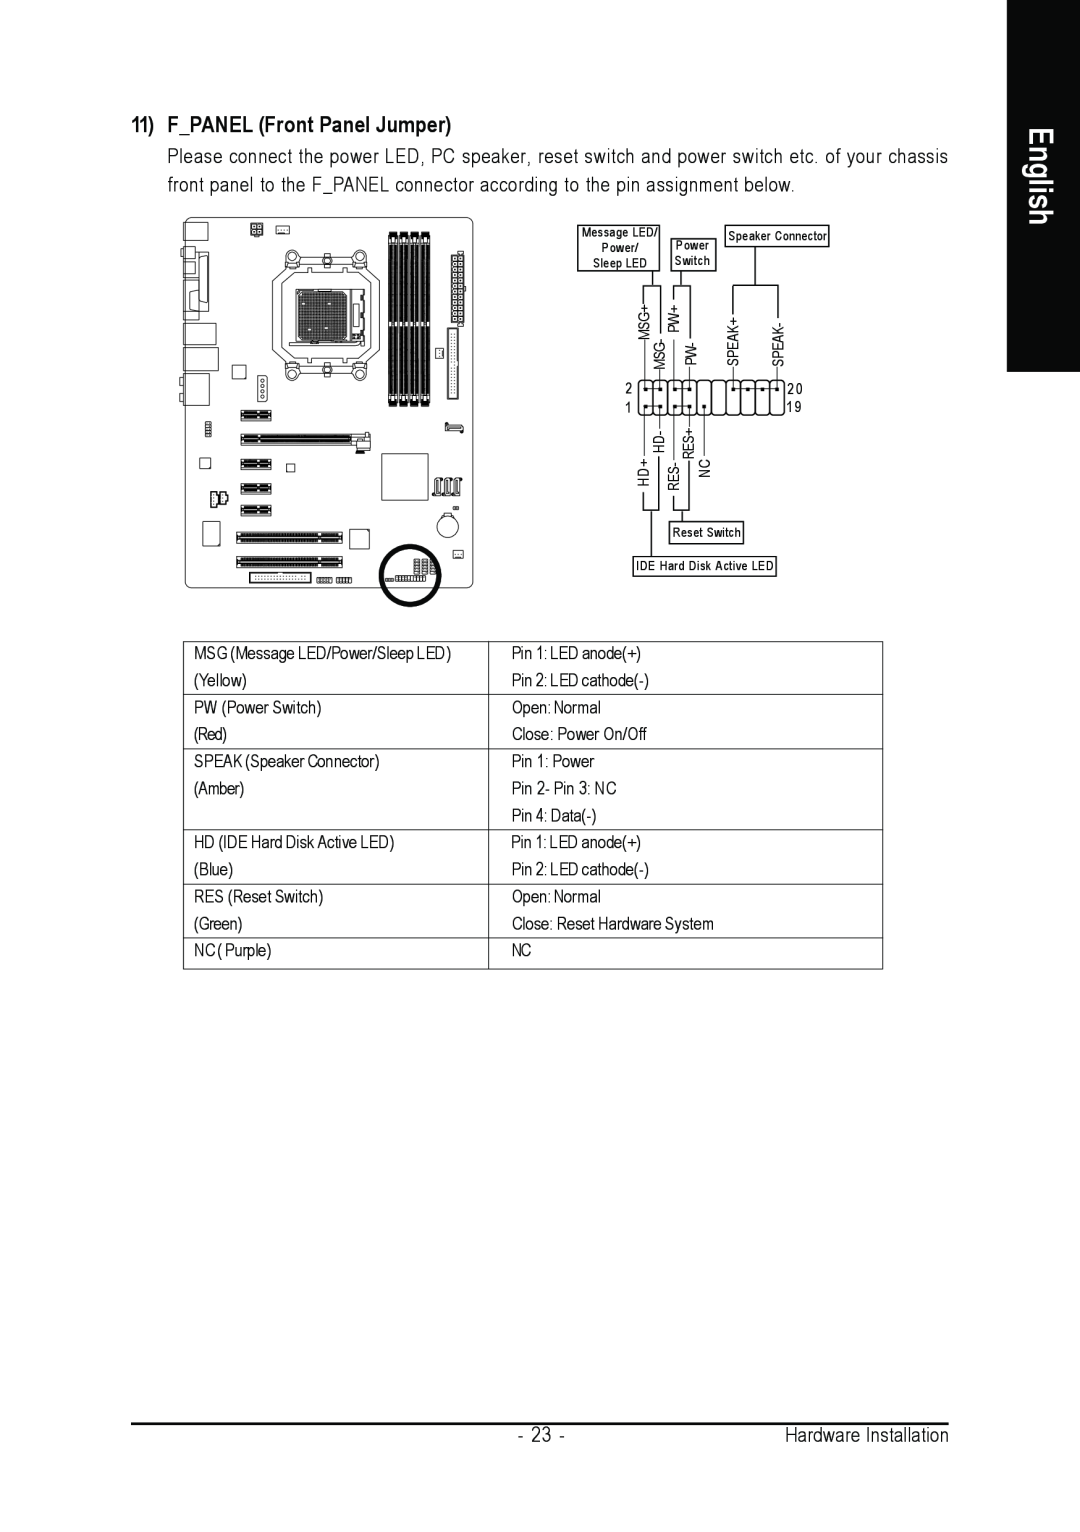 Gigabyte GA-M55S-S3 user manual FPANEL Front Panel Jumper, English, Message LED, Speaker Connector, Sleep LED, Switch 